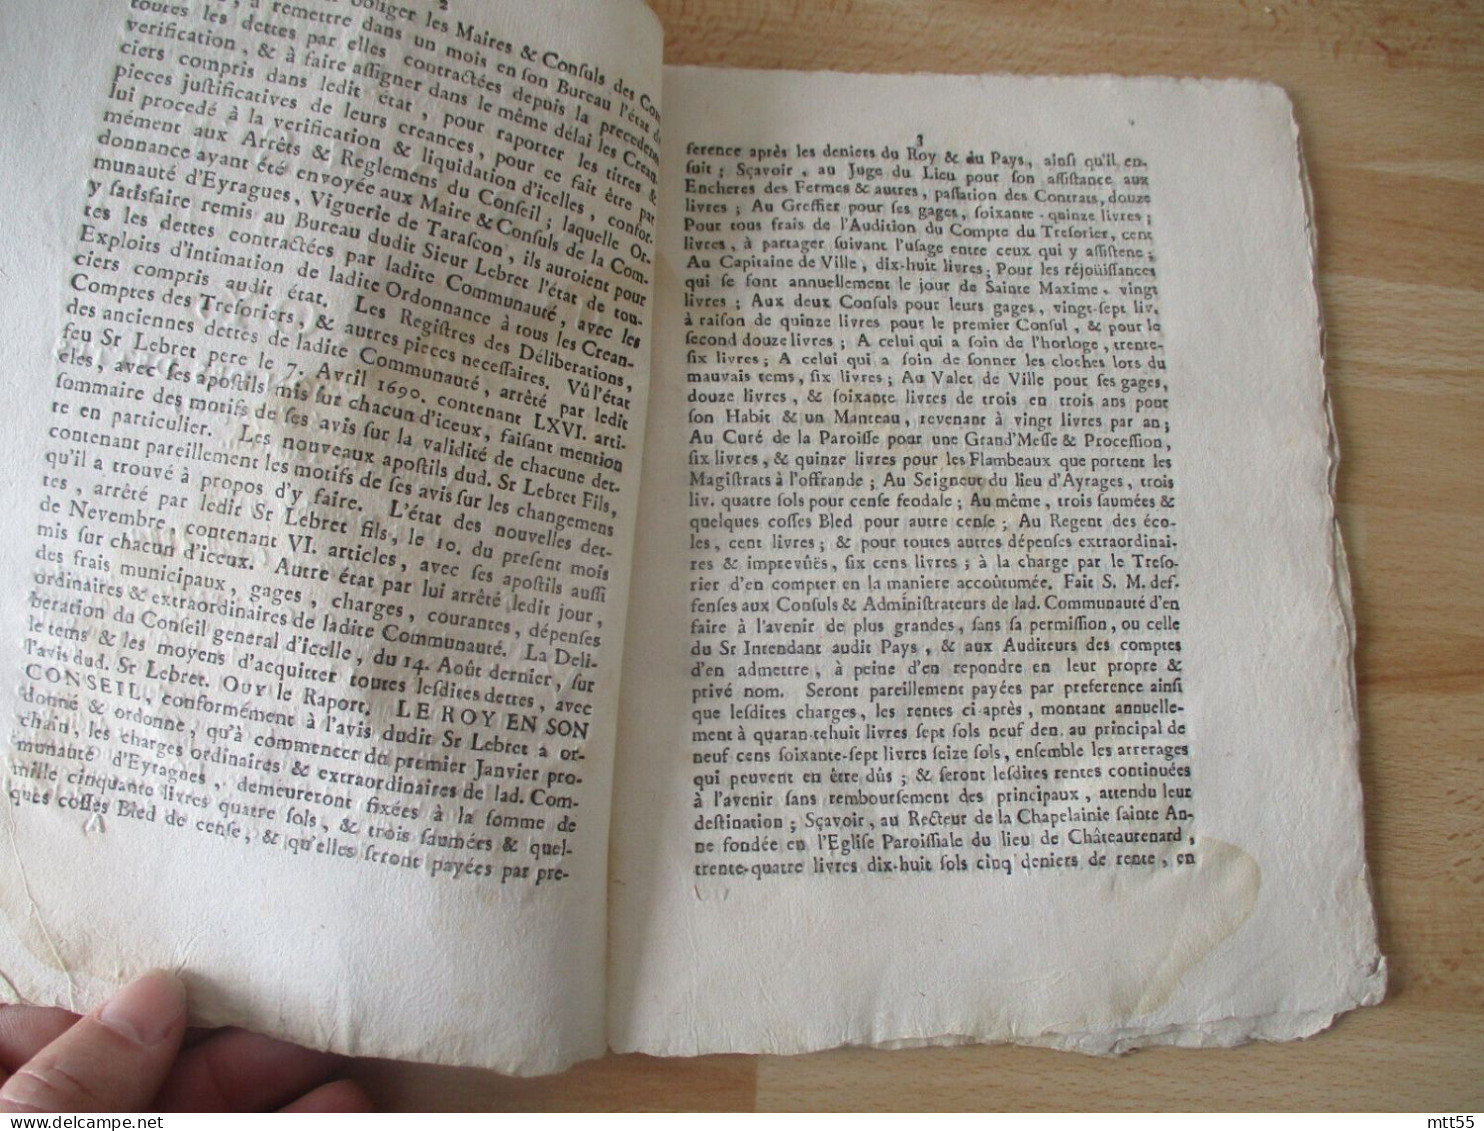 1718 COMMUNAUTE EYRAGUE VIGUERIE TARASCON ARREST CONSEIL ETAT DU ROI - Historische Dokumente